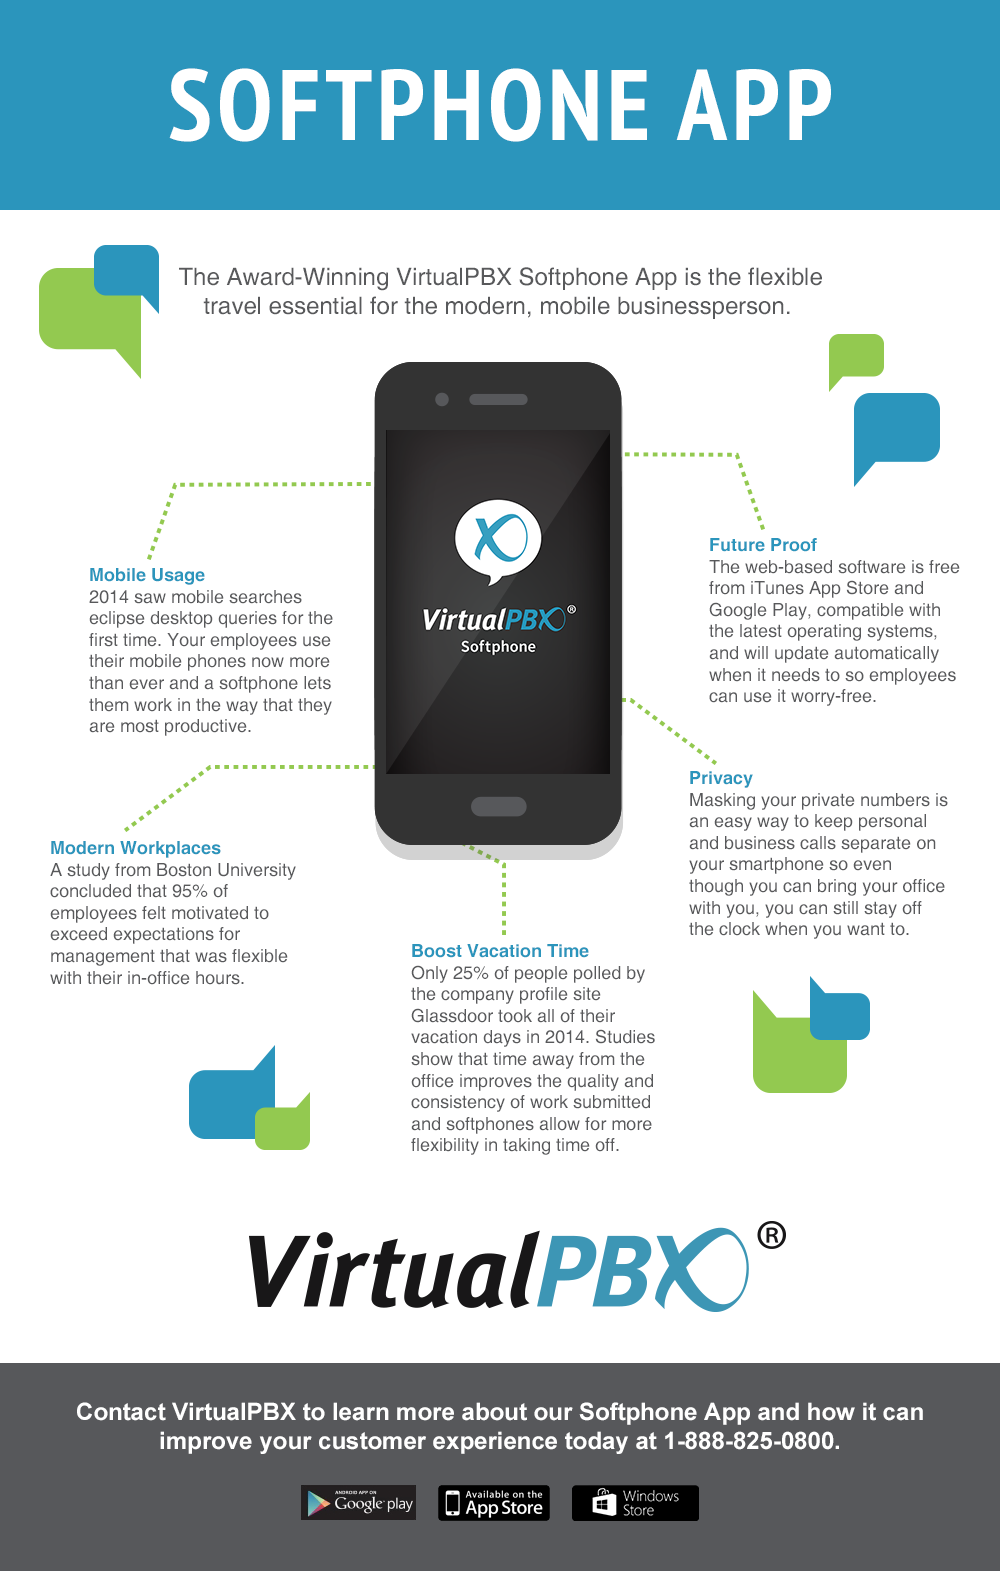 VirtualPBX Softphone App